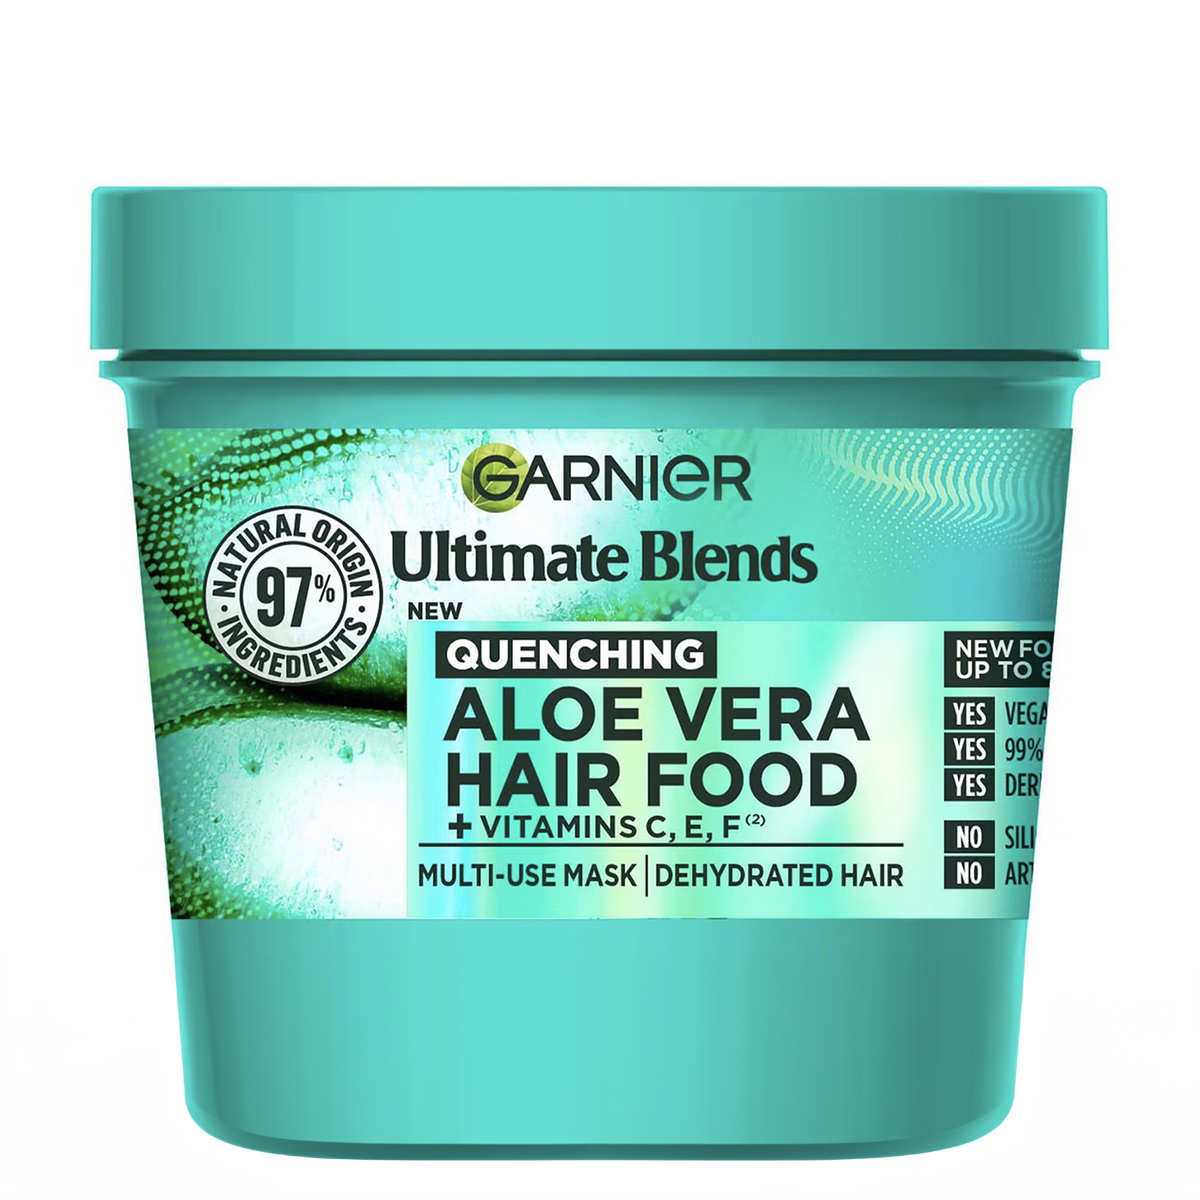 Garnier Ultimate Blends Hair Food Aloe Vera 3 in 1 Normal Hair Mask Treatment 390ml 12,95 euros